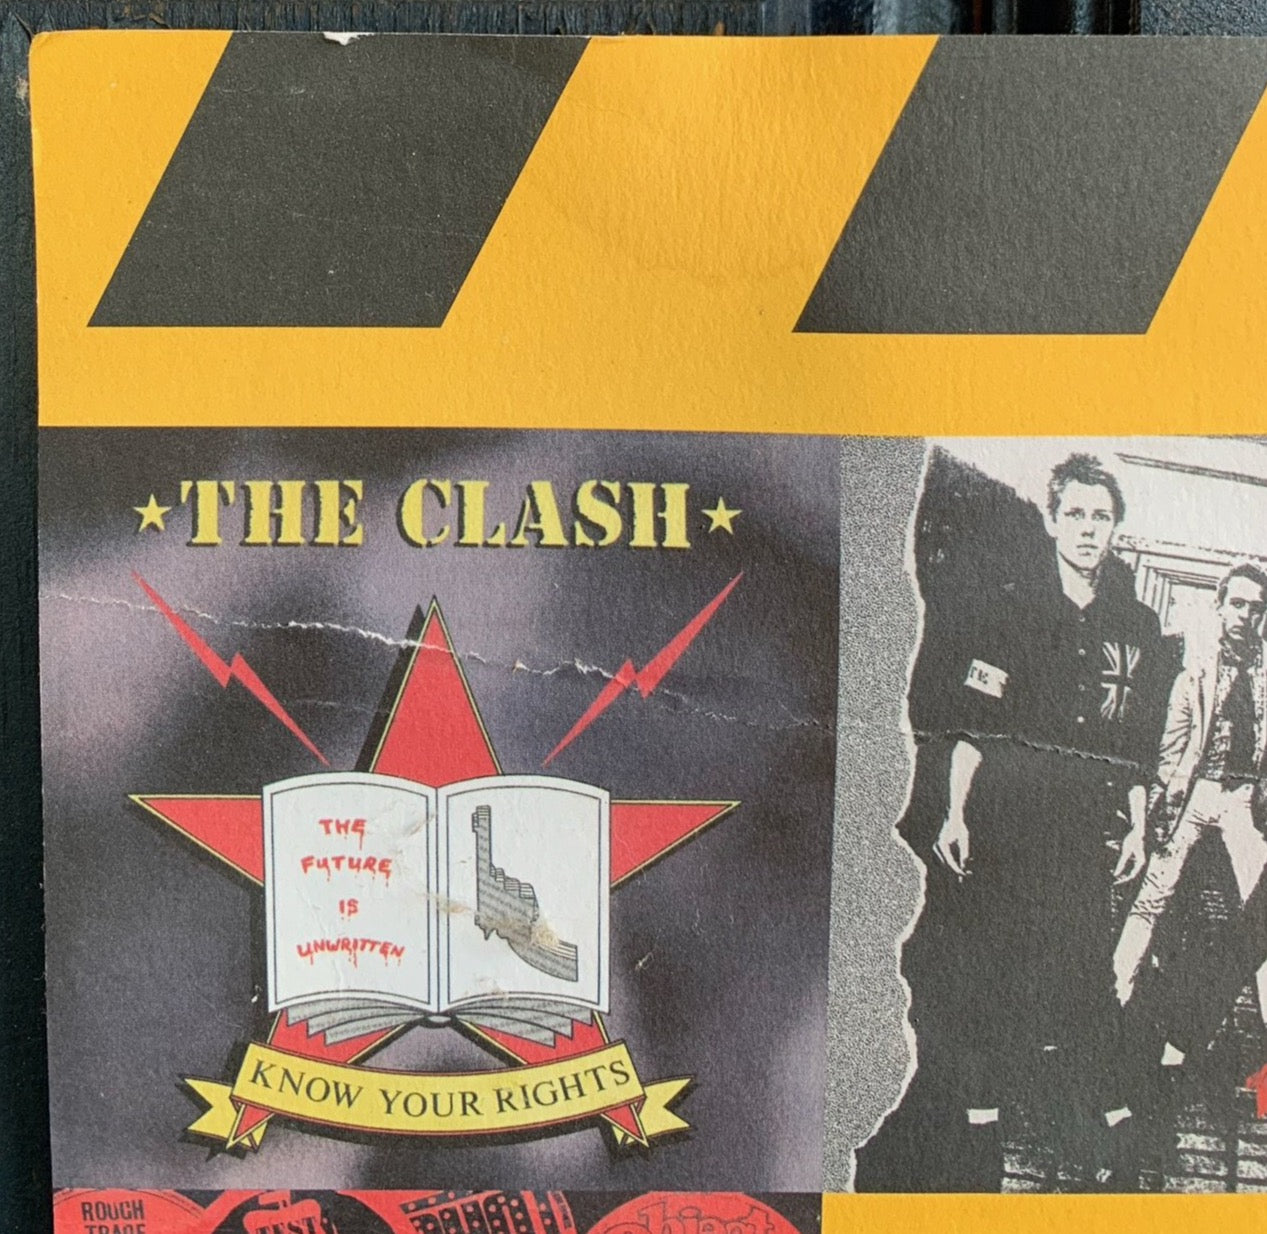 THE CLASH "Singles" Box Set Promo Poster